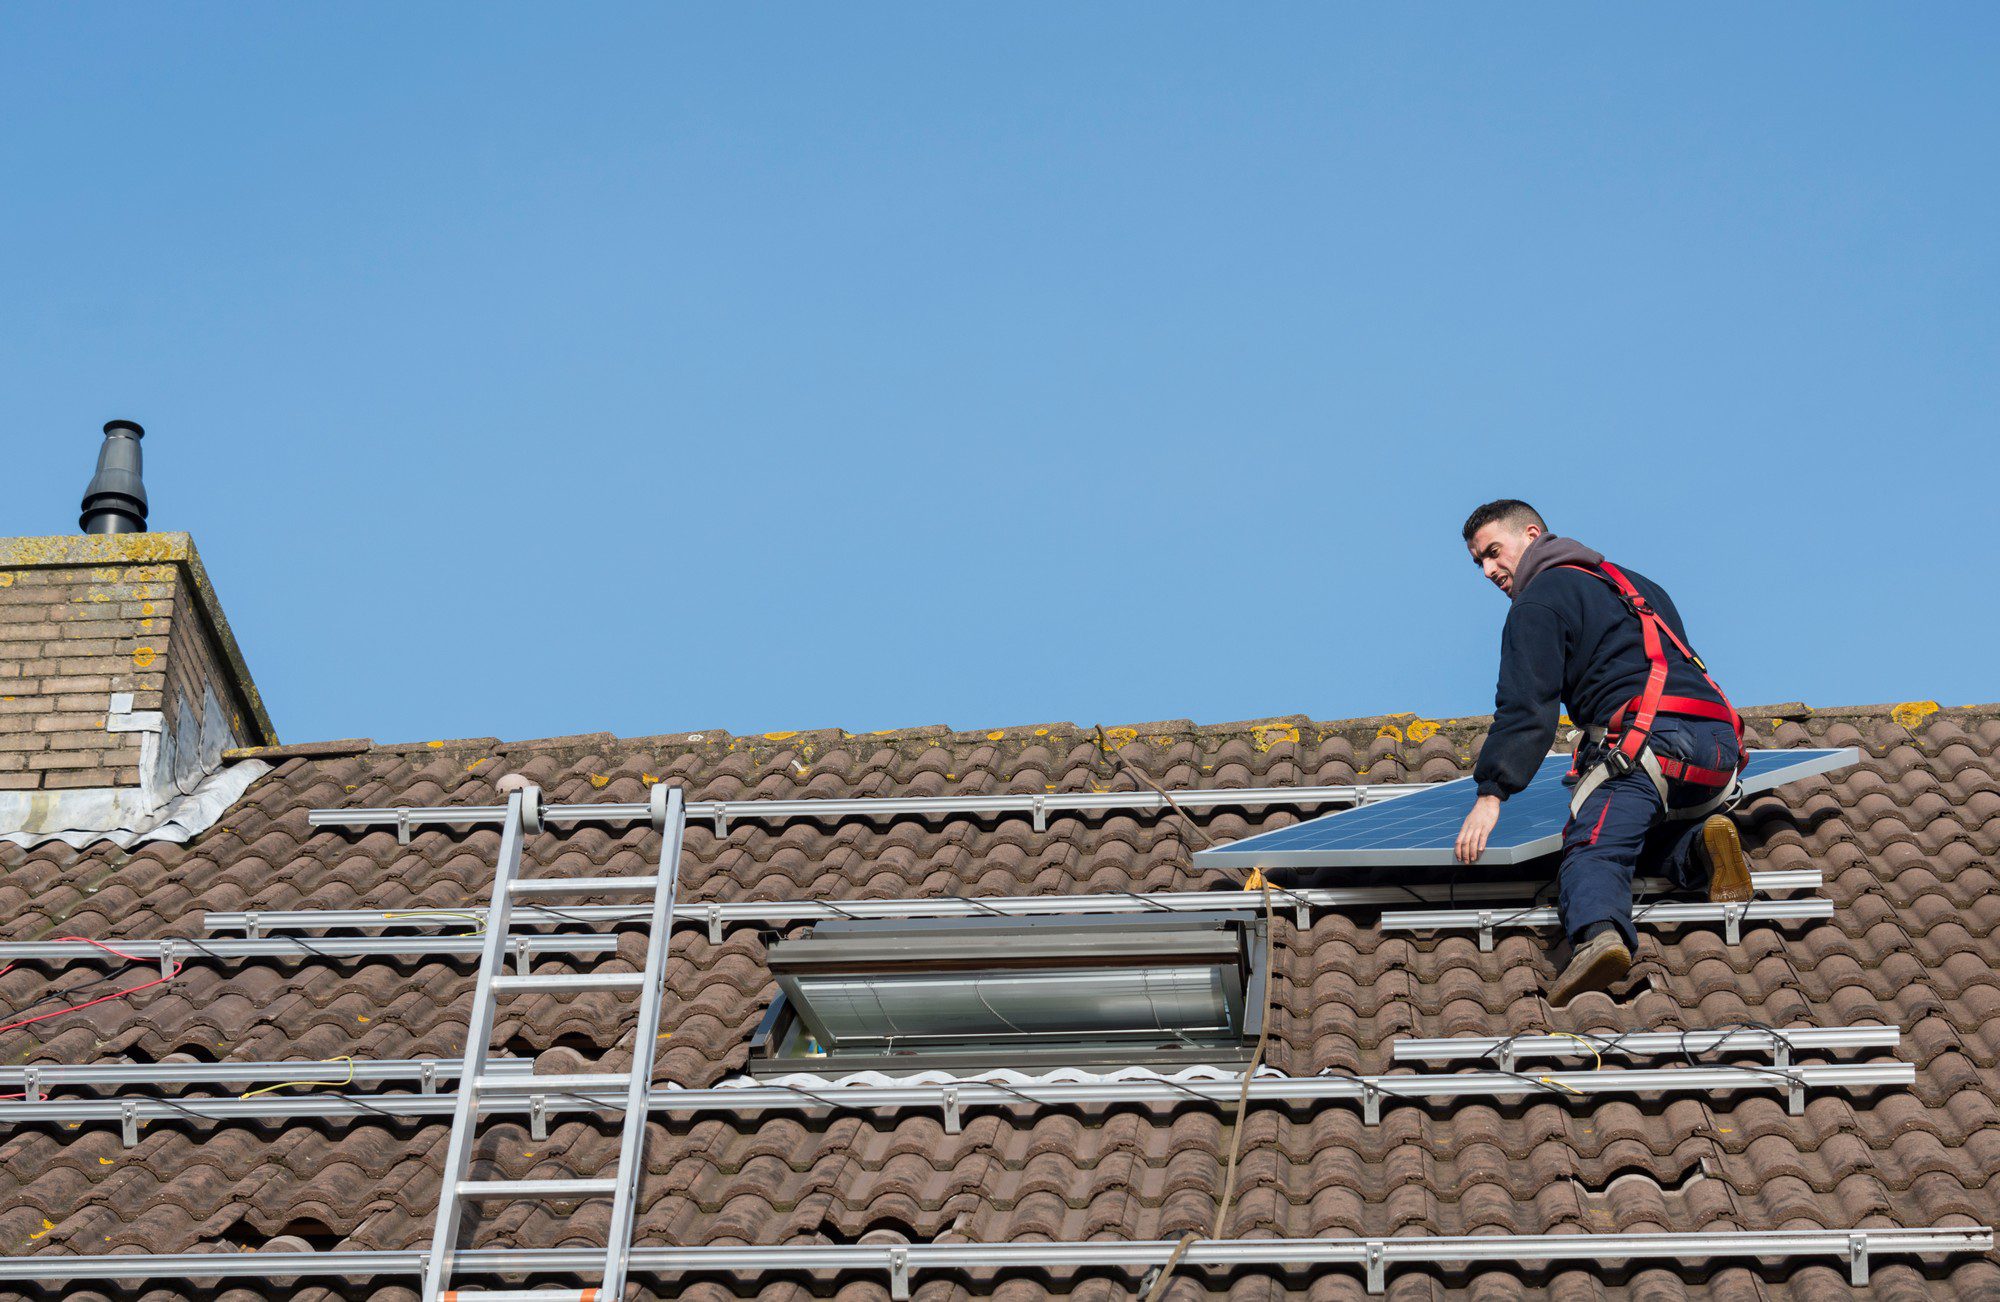 Man Putting The Solar Panel On The Roof 2022 10 03 22 30 56 Utc